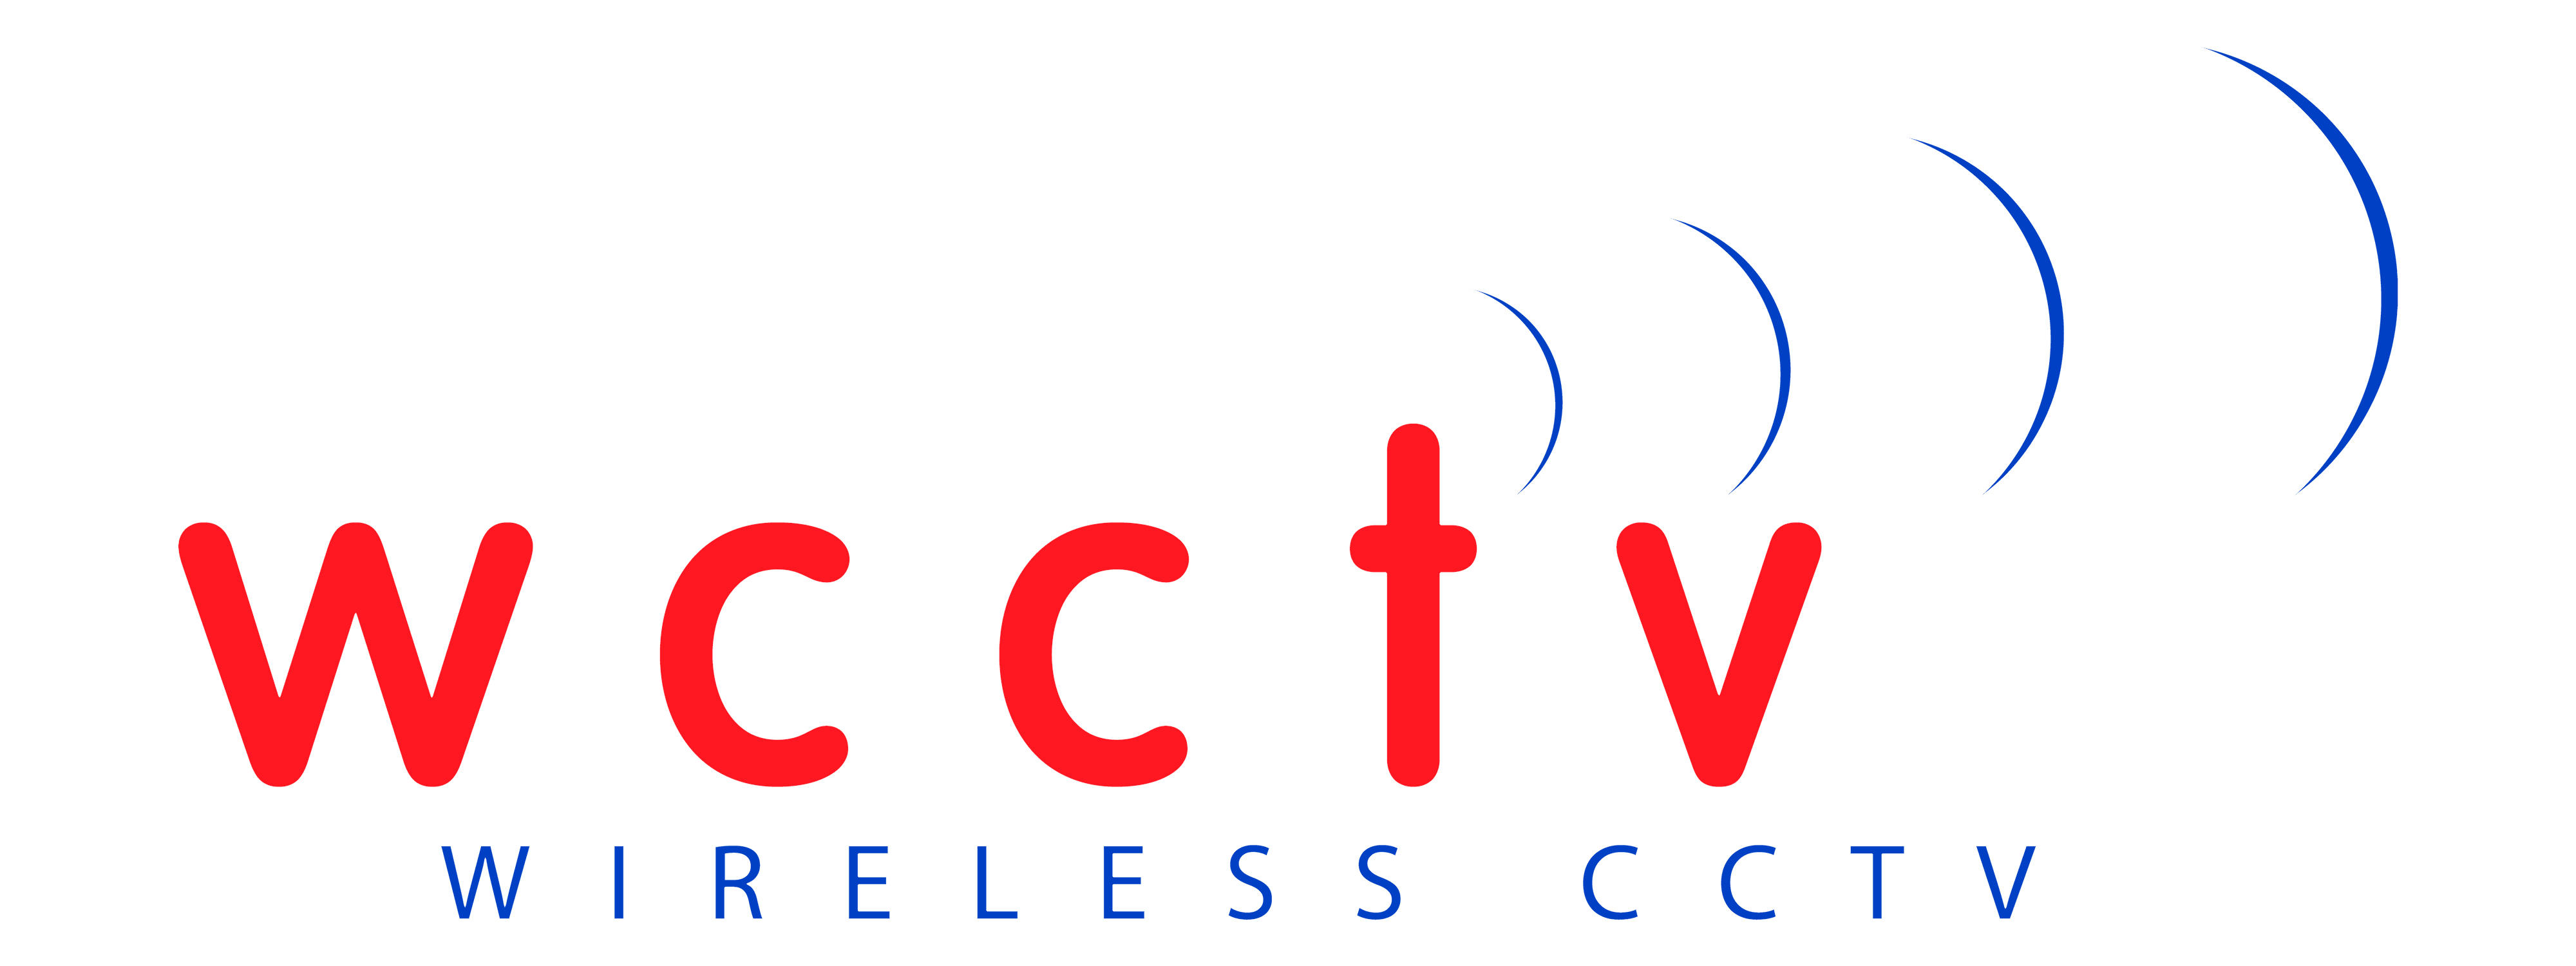 WCCTV: Mobile Video Surveillance Cameras